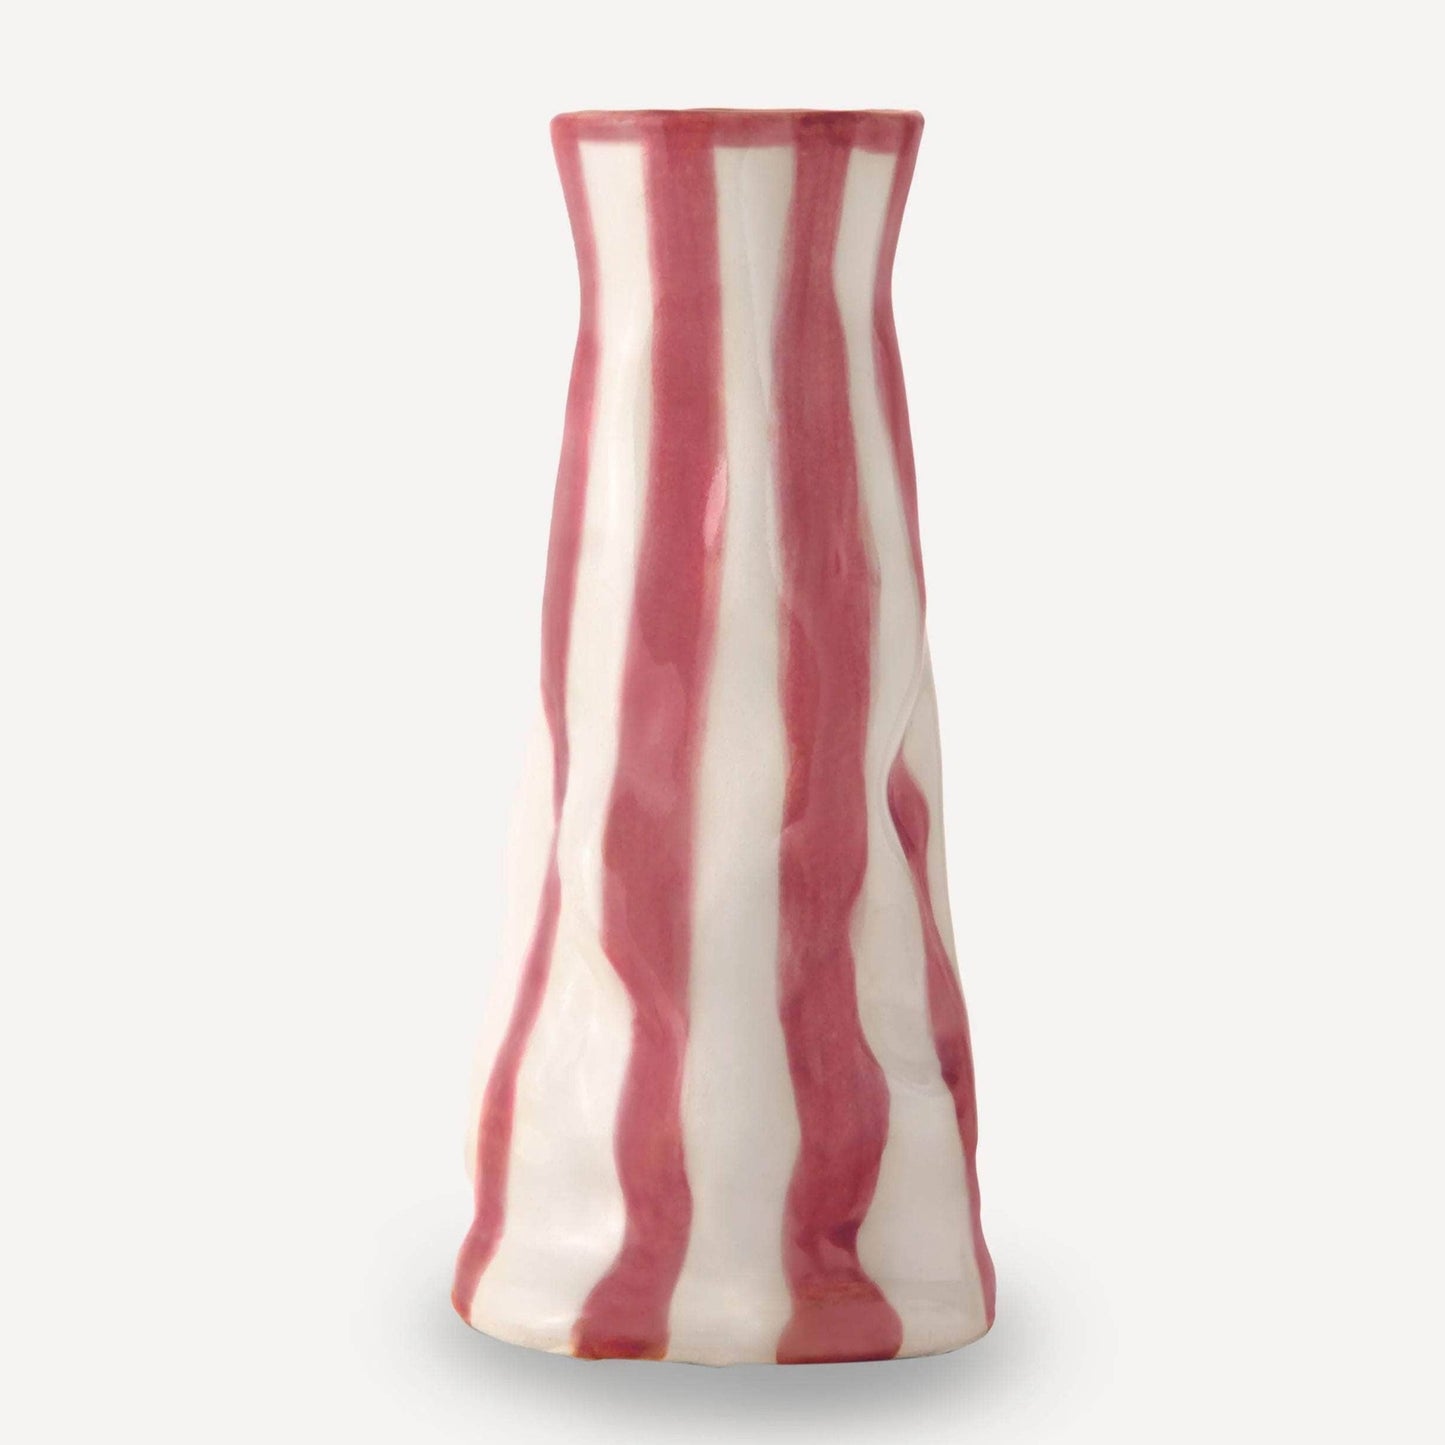 Ruby Candy Stripe Vase